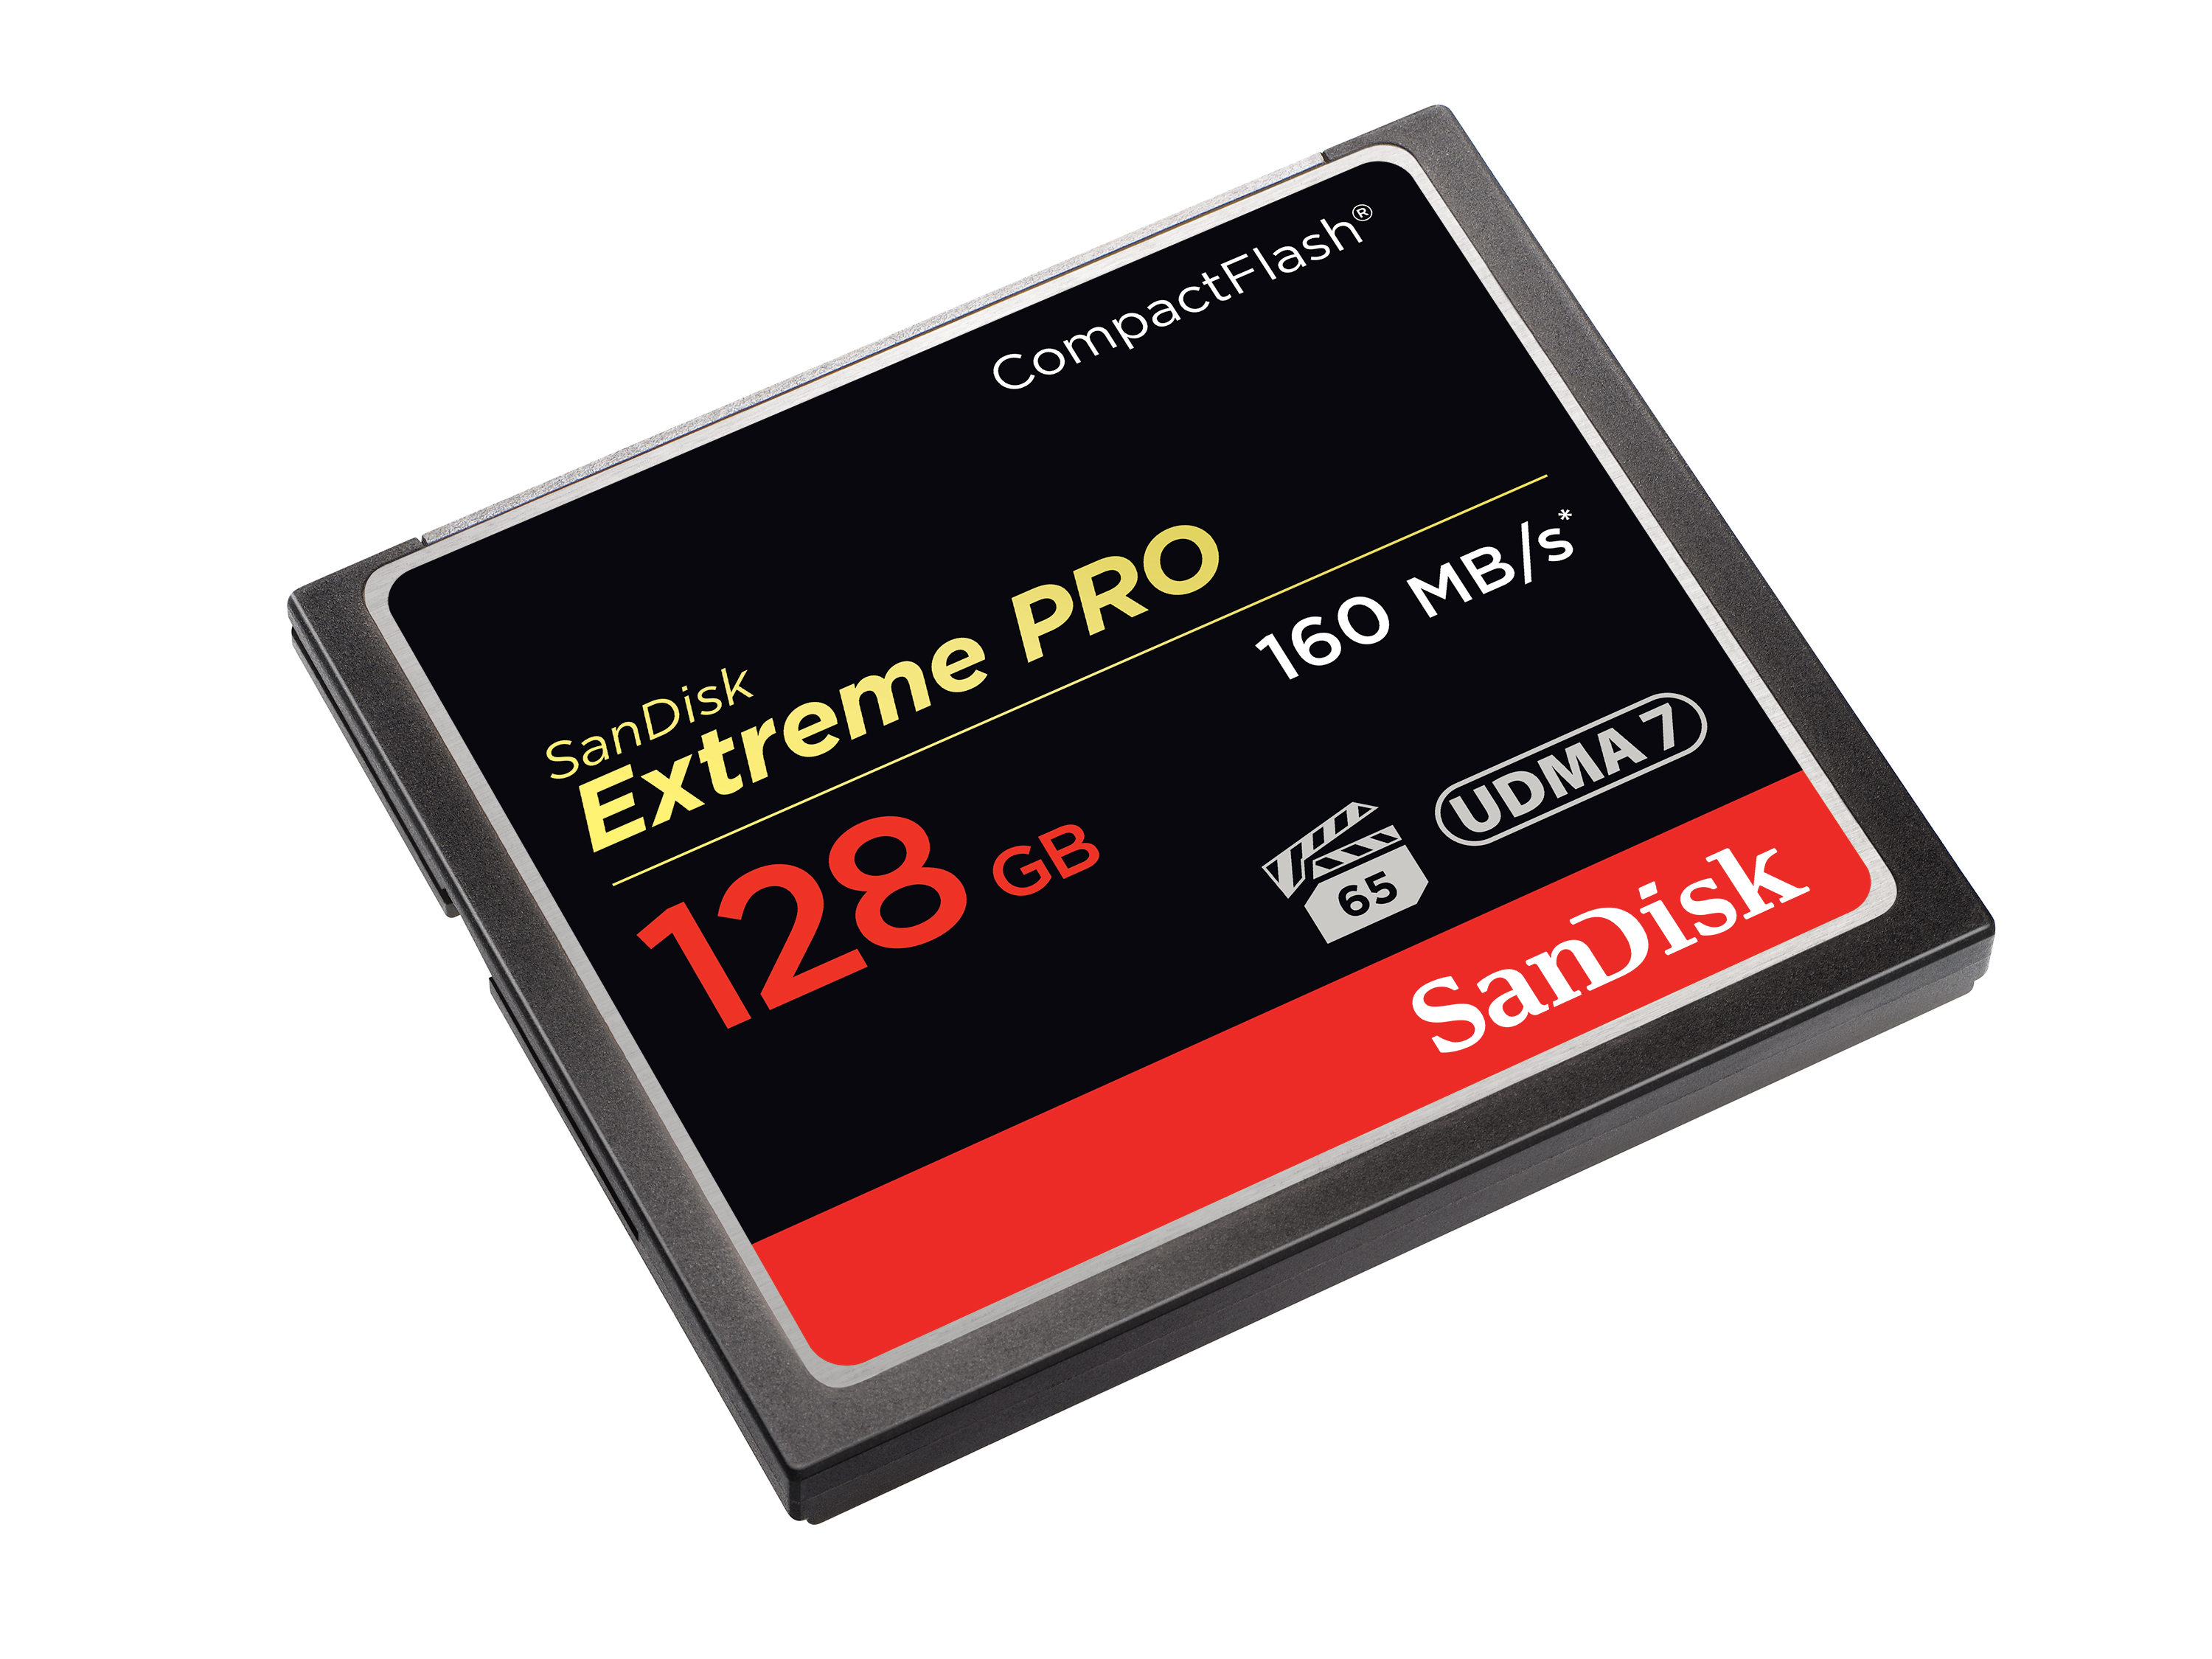 SDCFXPS-128G-X46 160 128 SANDISK Flash 128GB, CF EXTR.PRO MB/s Speicherkarte, Compact GB,